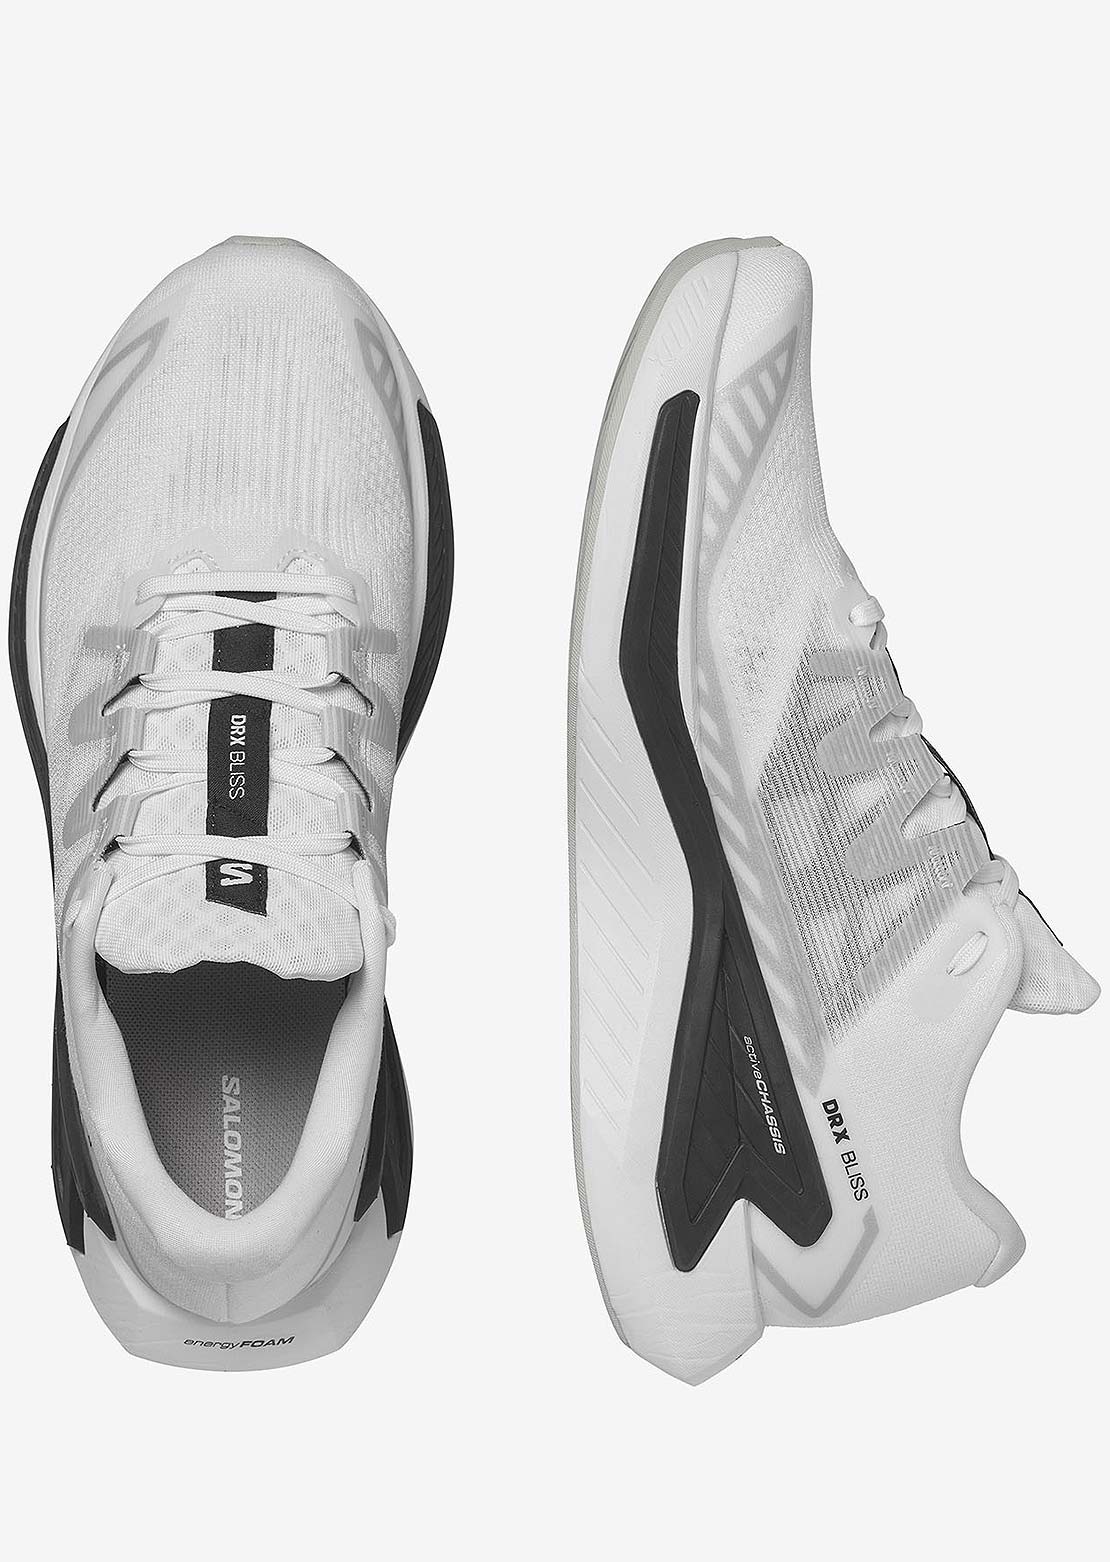 Salomon Men&#39;s Drx Bliss Shoes White/White/Black